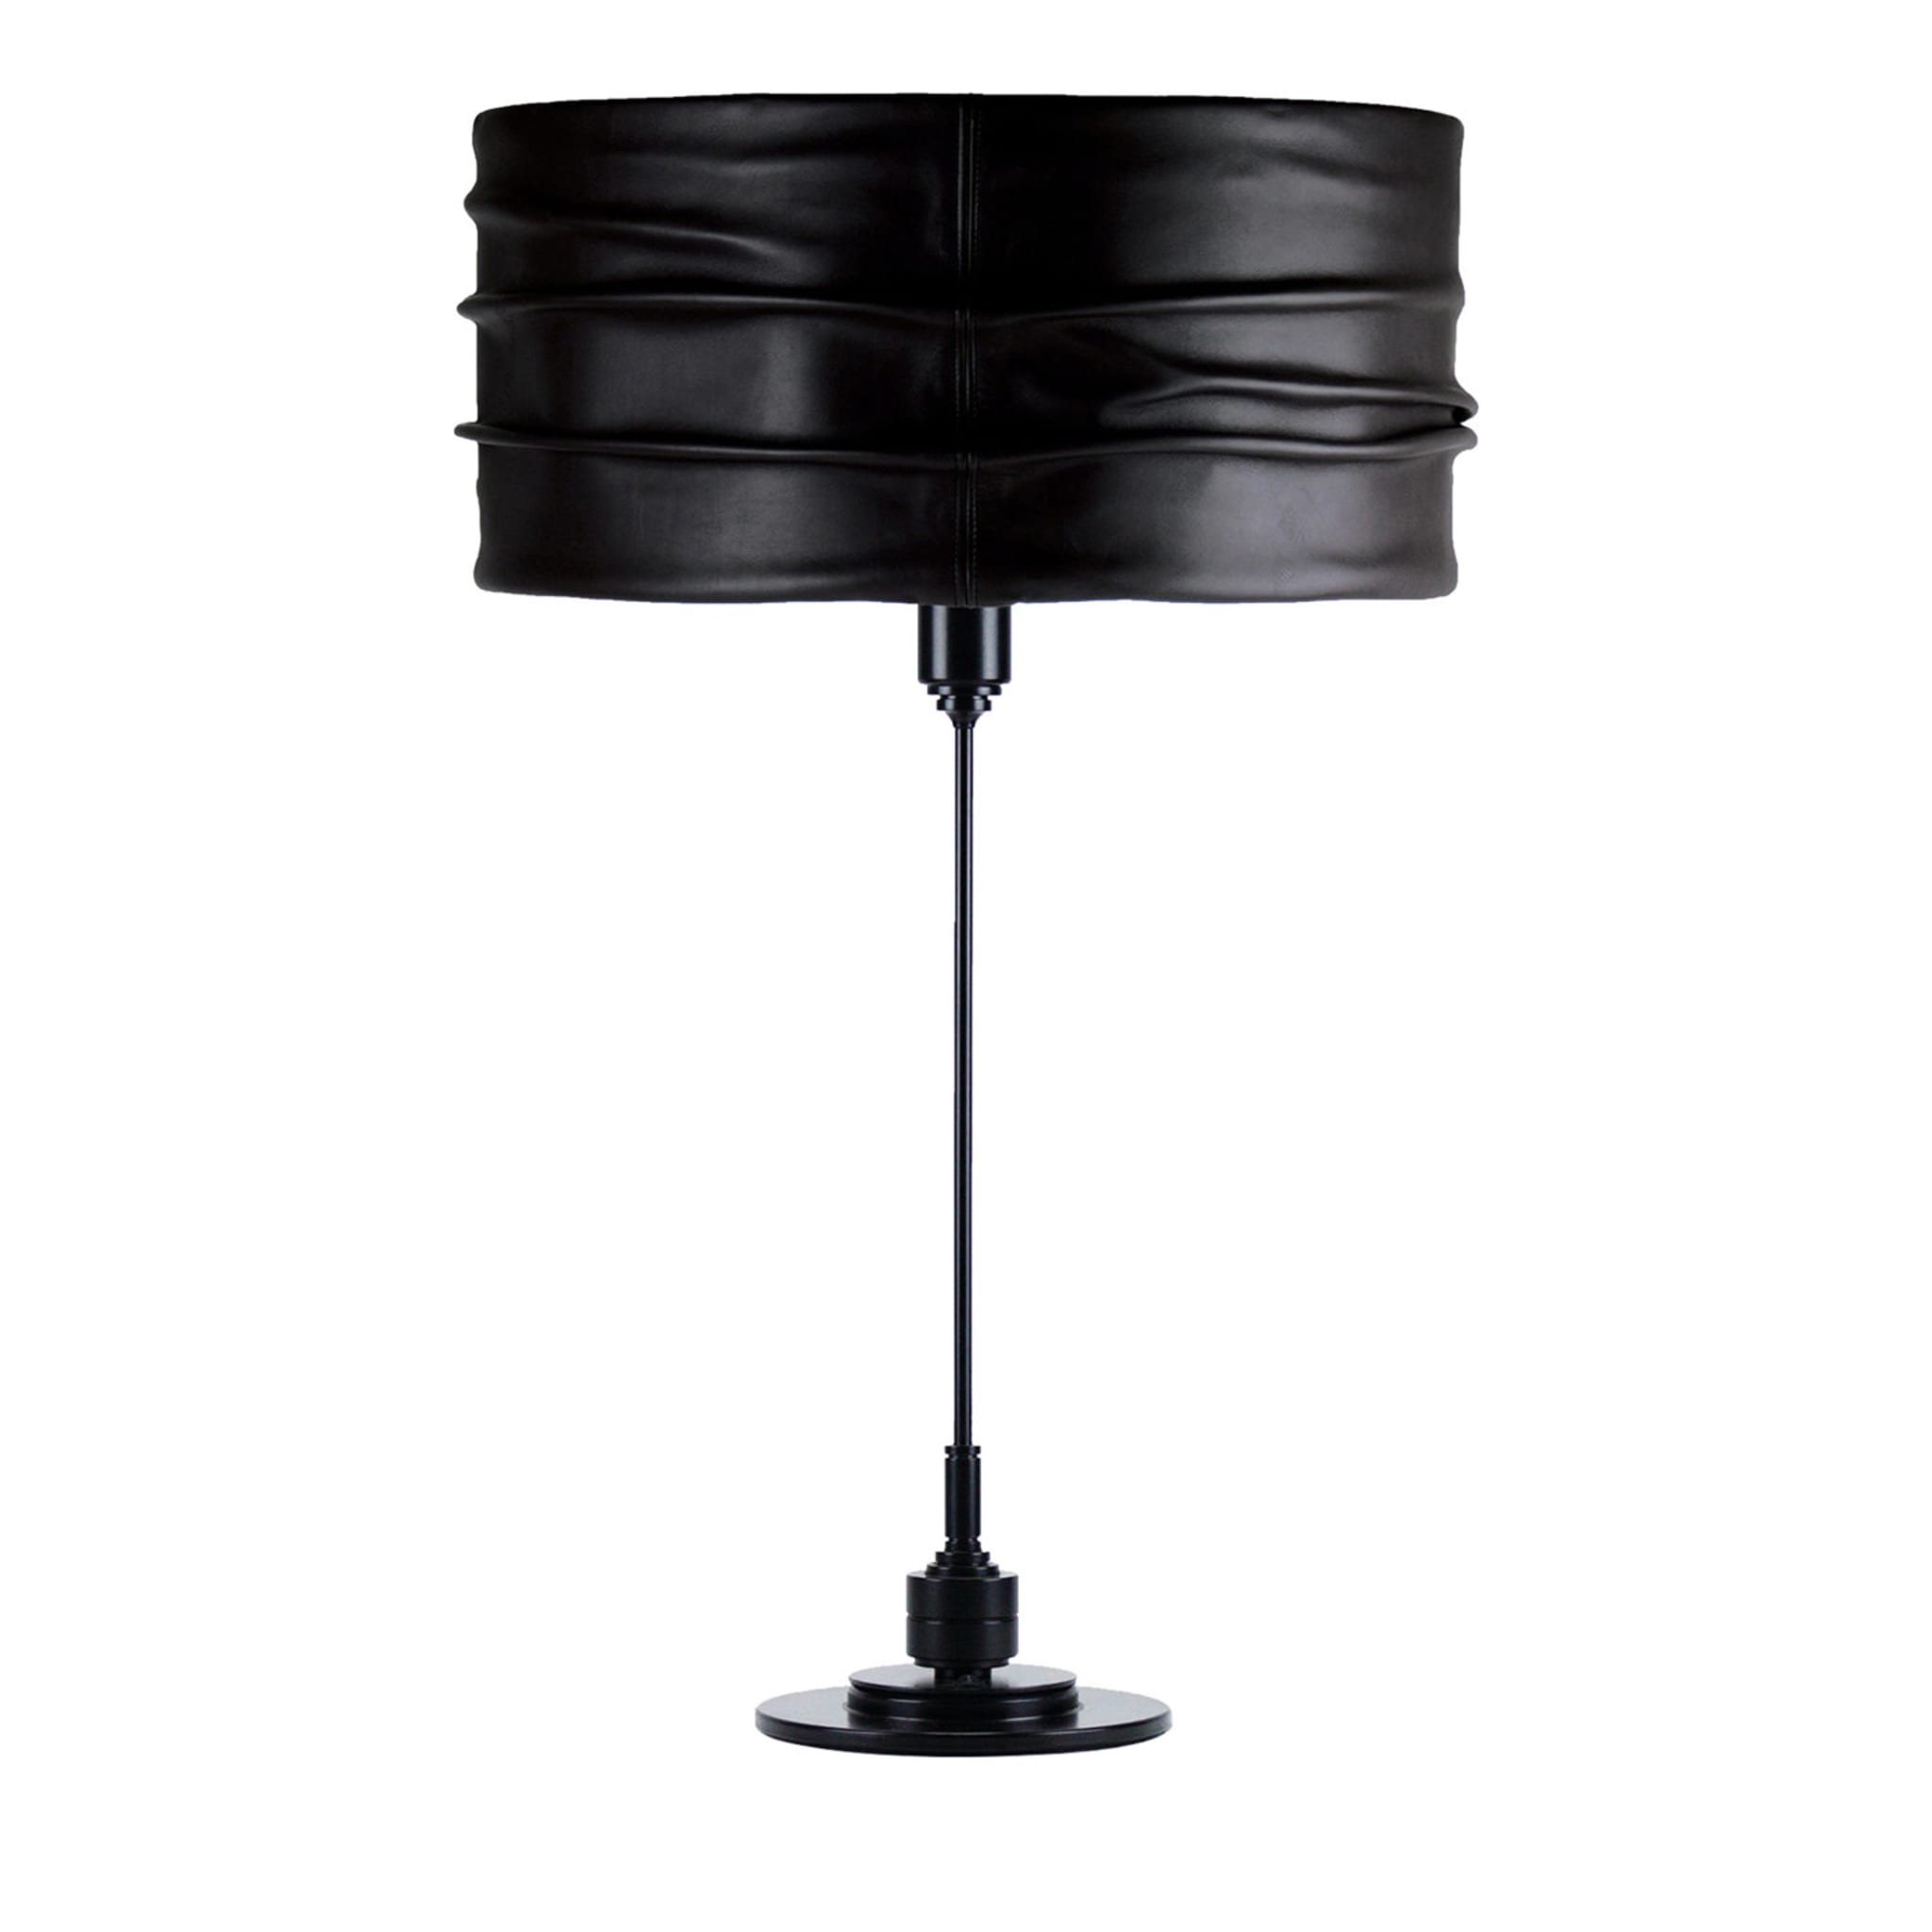 Semele lampe de table en cuir noir #2 - Vue principale